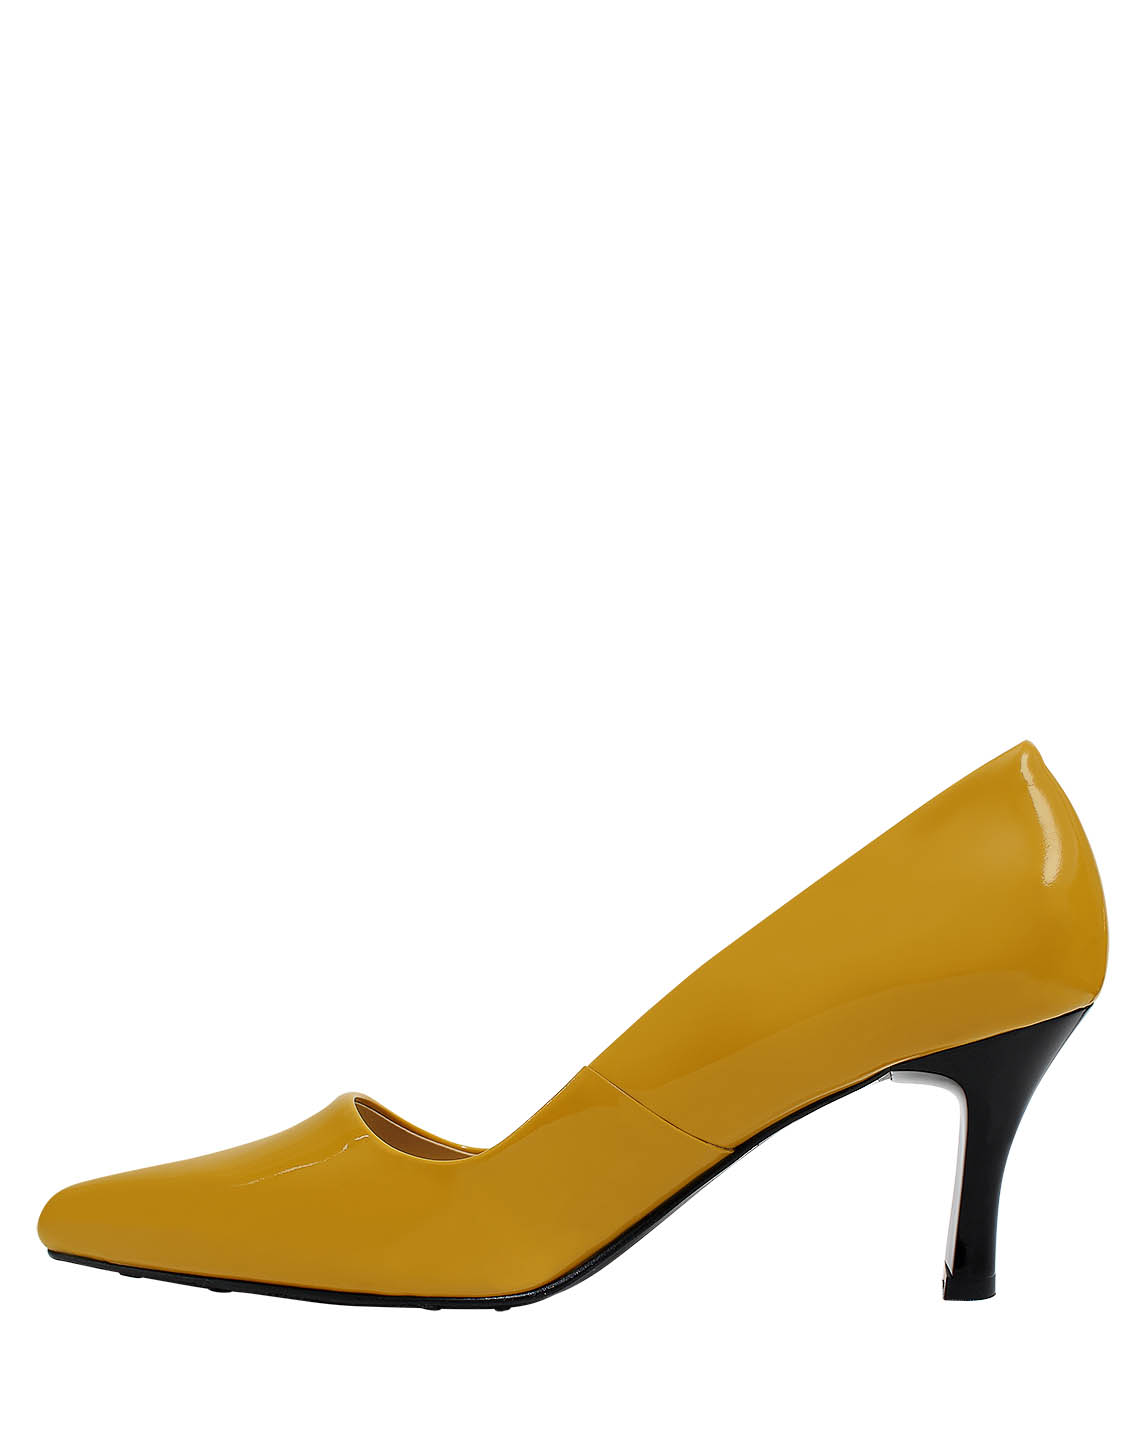 Calzado Reina FR -7892 Color Amarillo